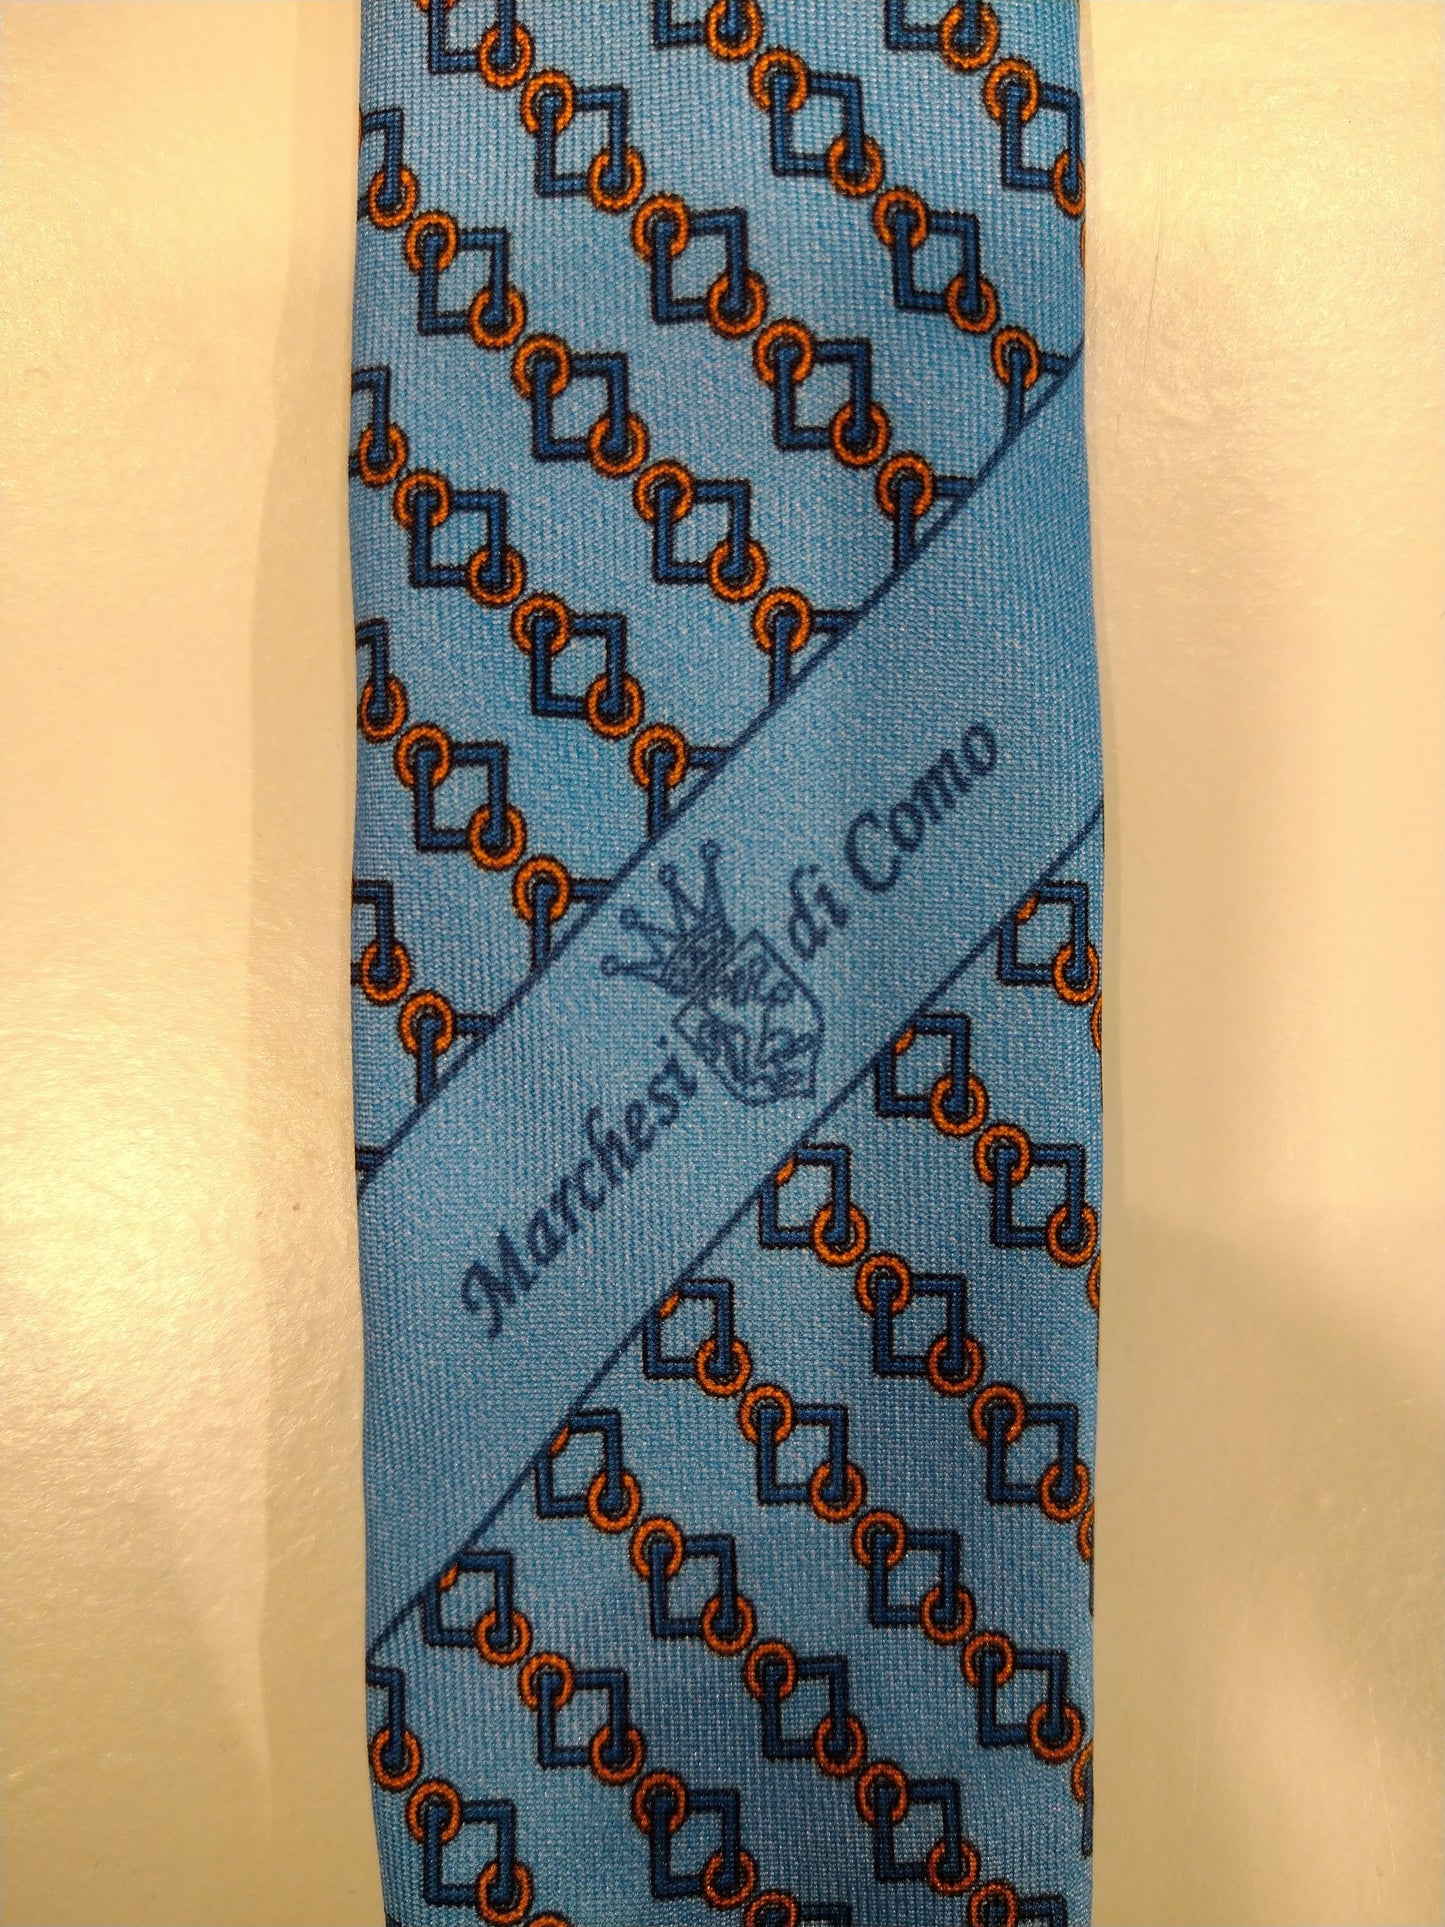 Cravatta di seta stretta di Marchesi di Como. Bel motivo blu / rosso.